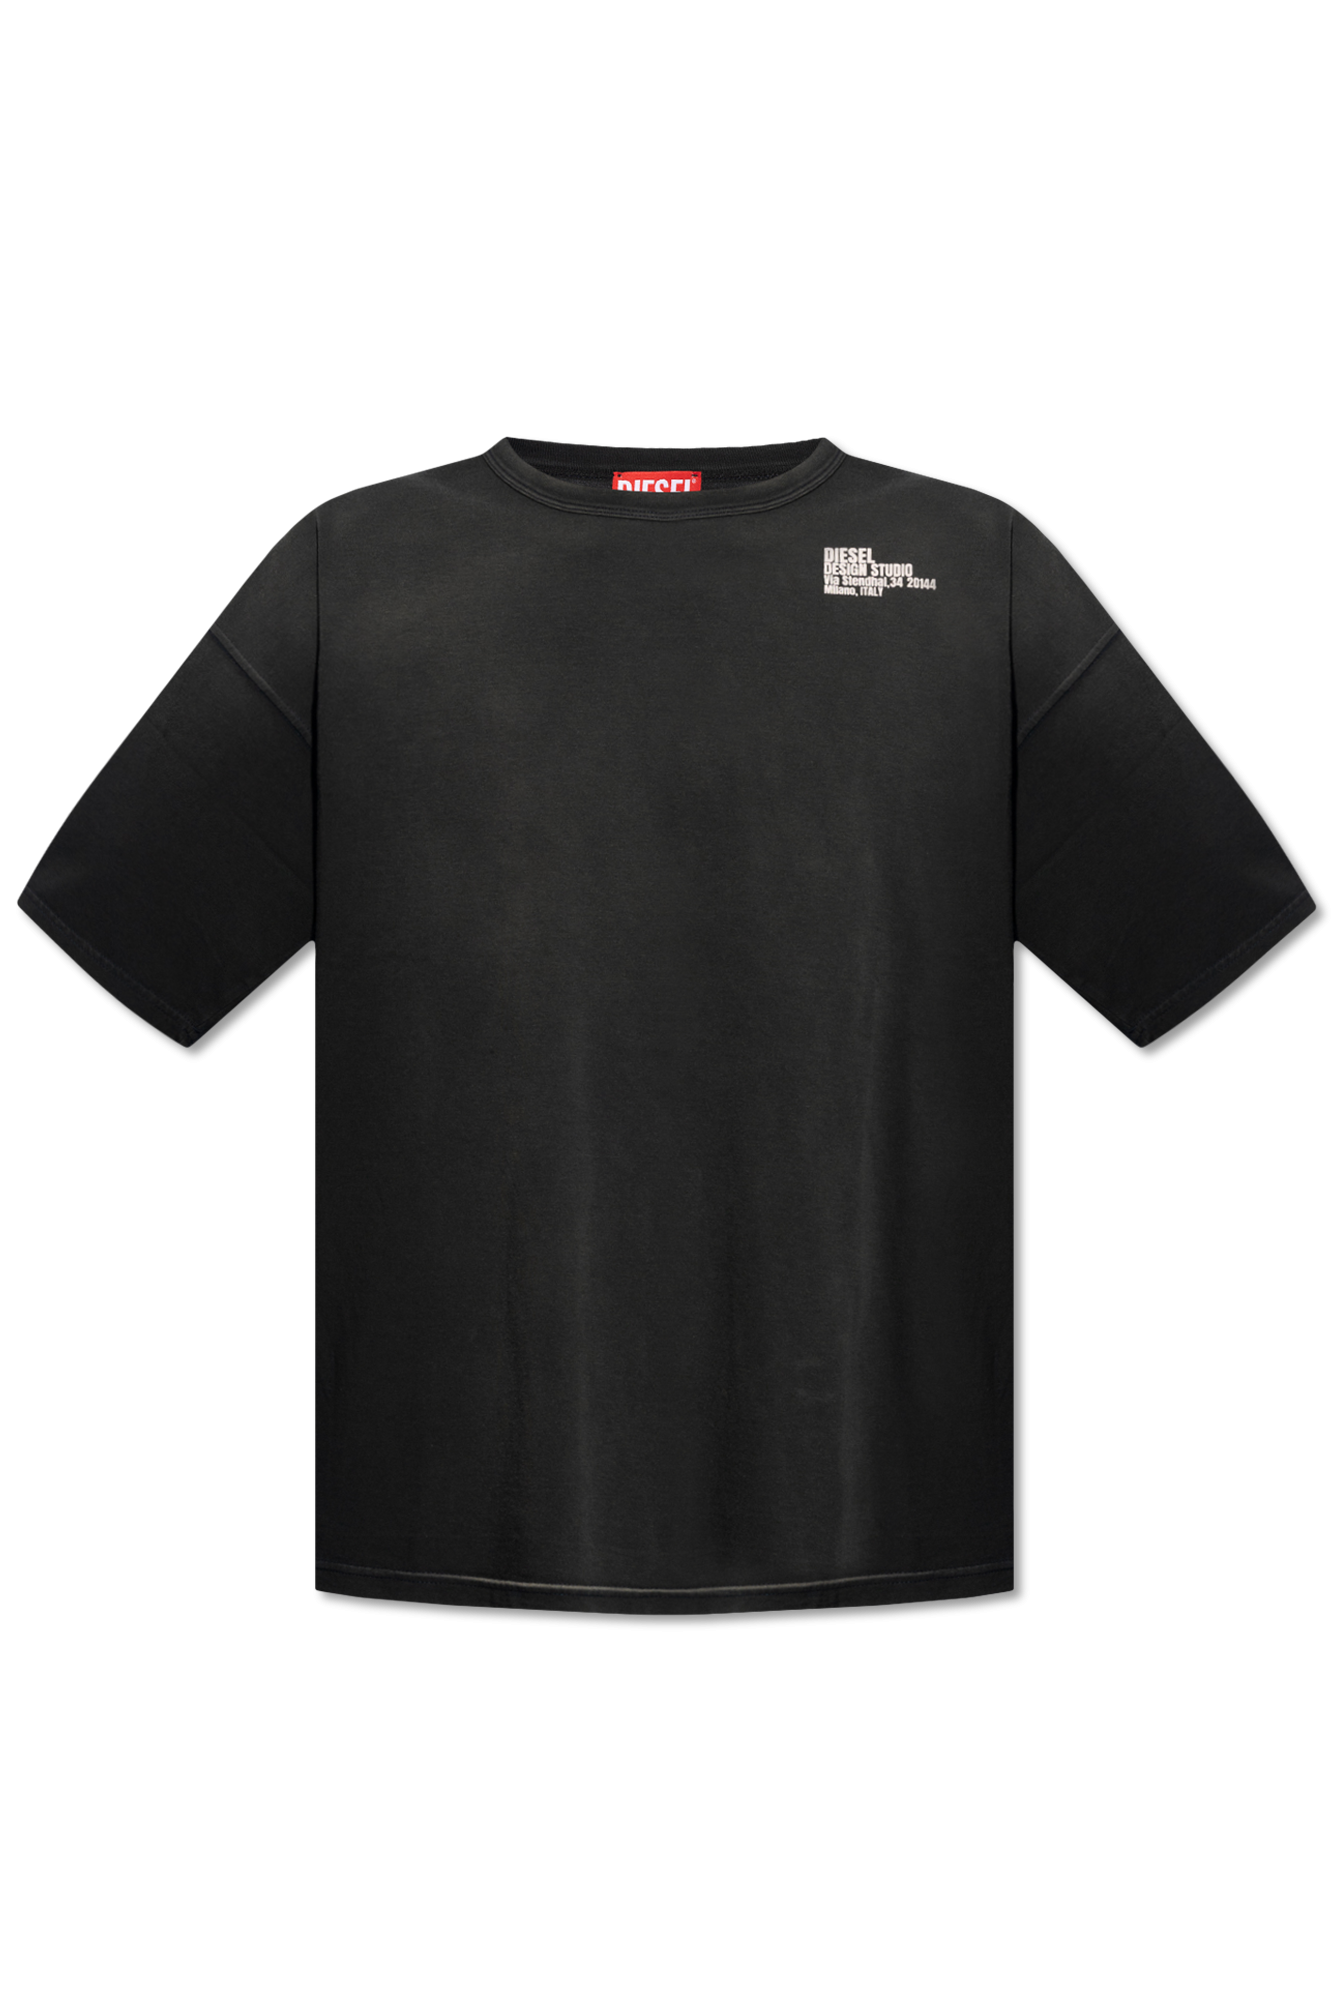 Diesel 'T-BOXT-N7' T-shirt, Men's Clothing